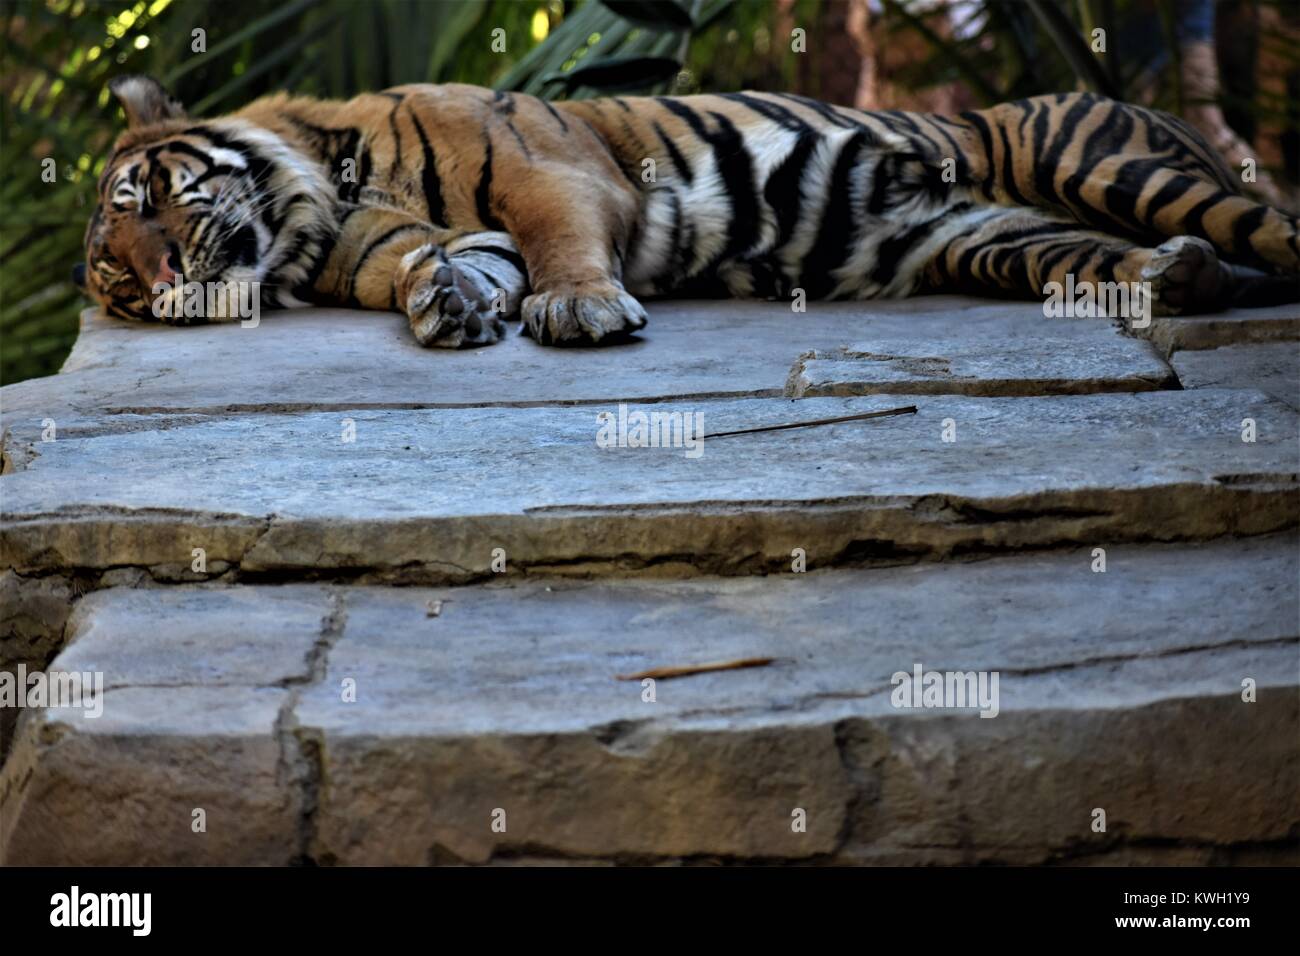 Giant Tiger Sleeping Stock Photo - Alamy